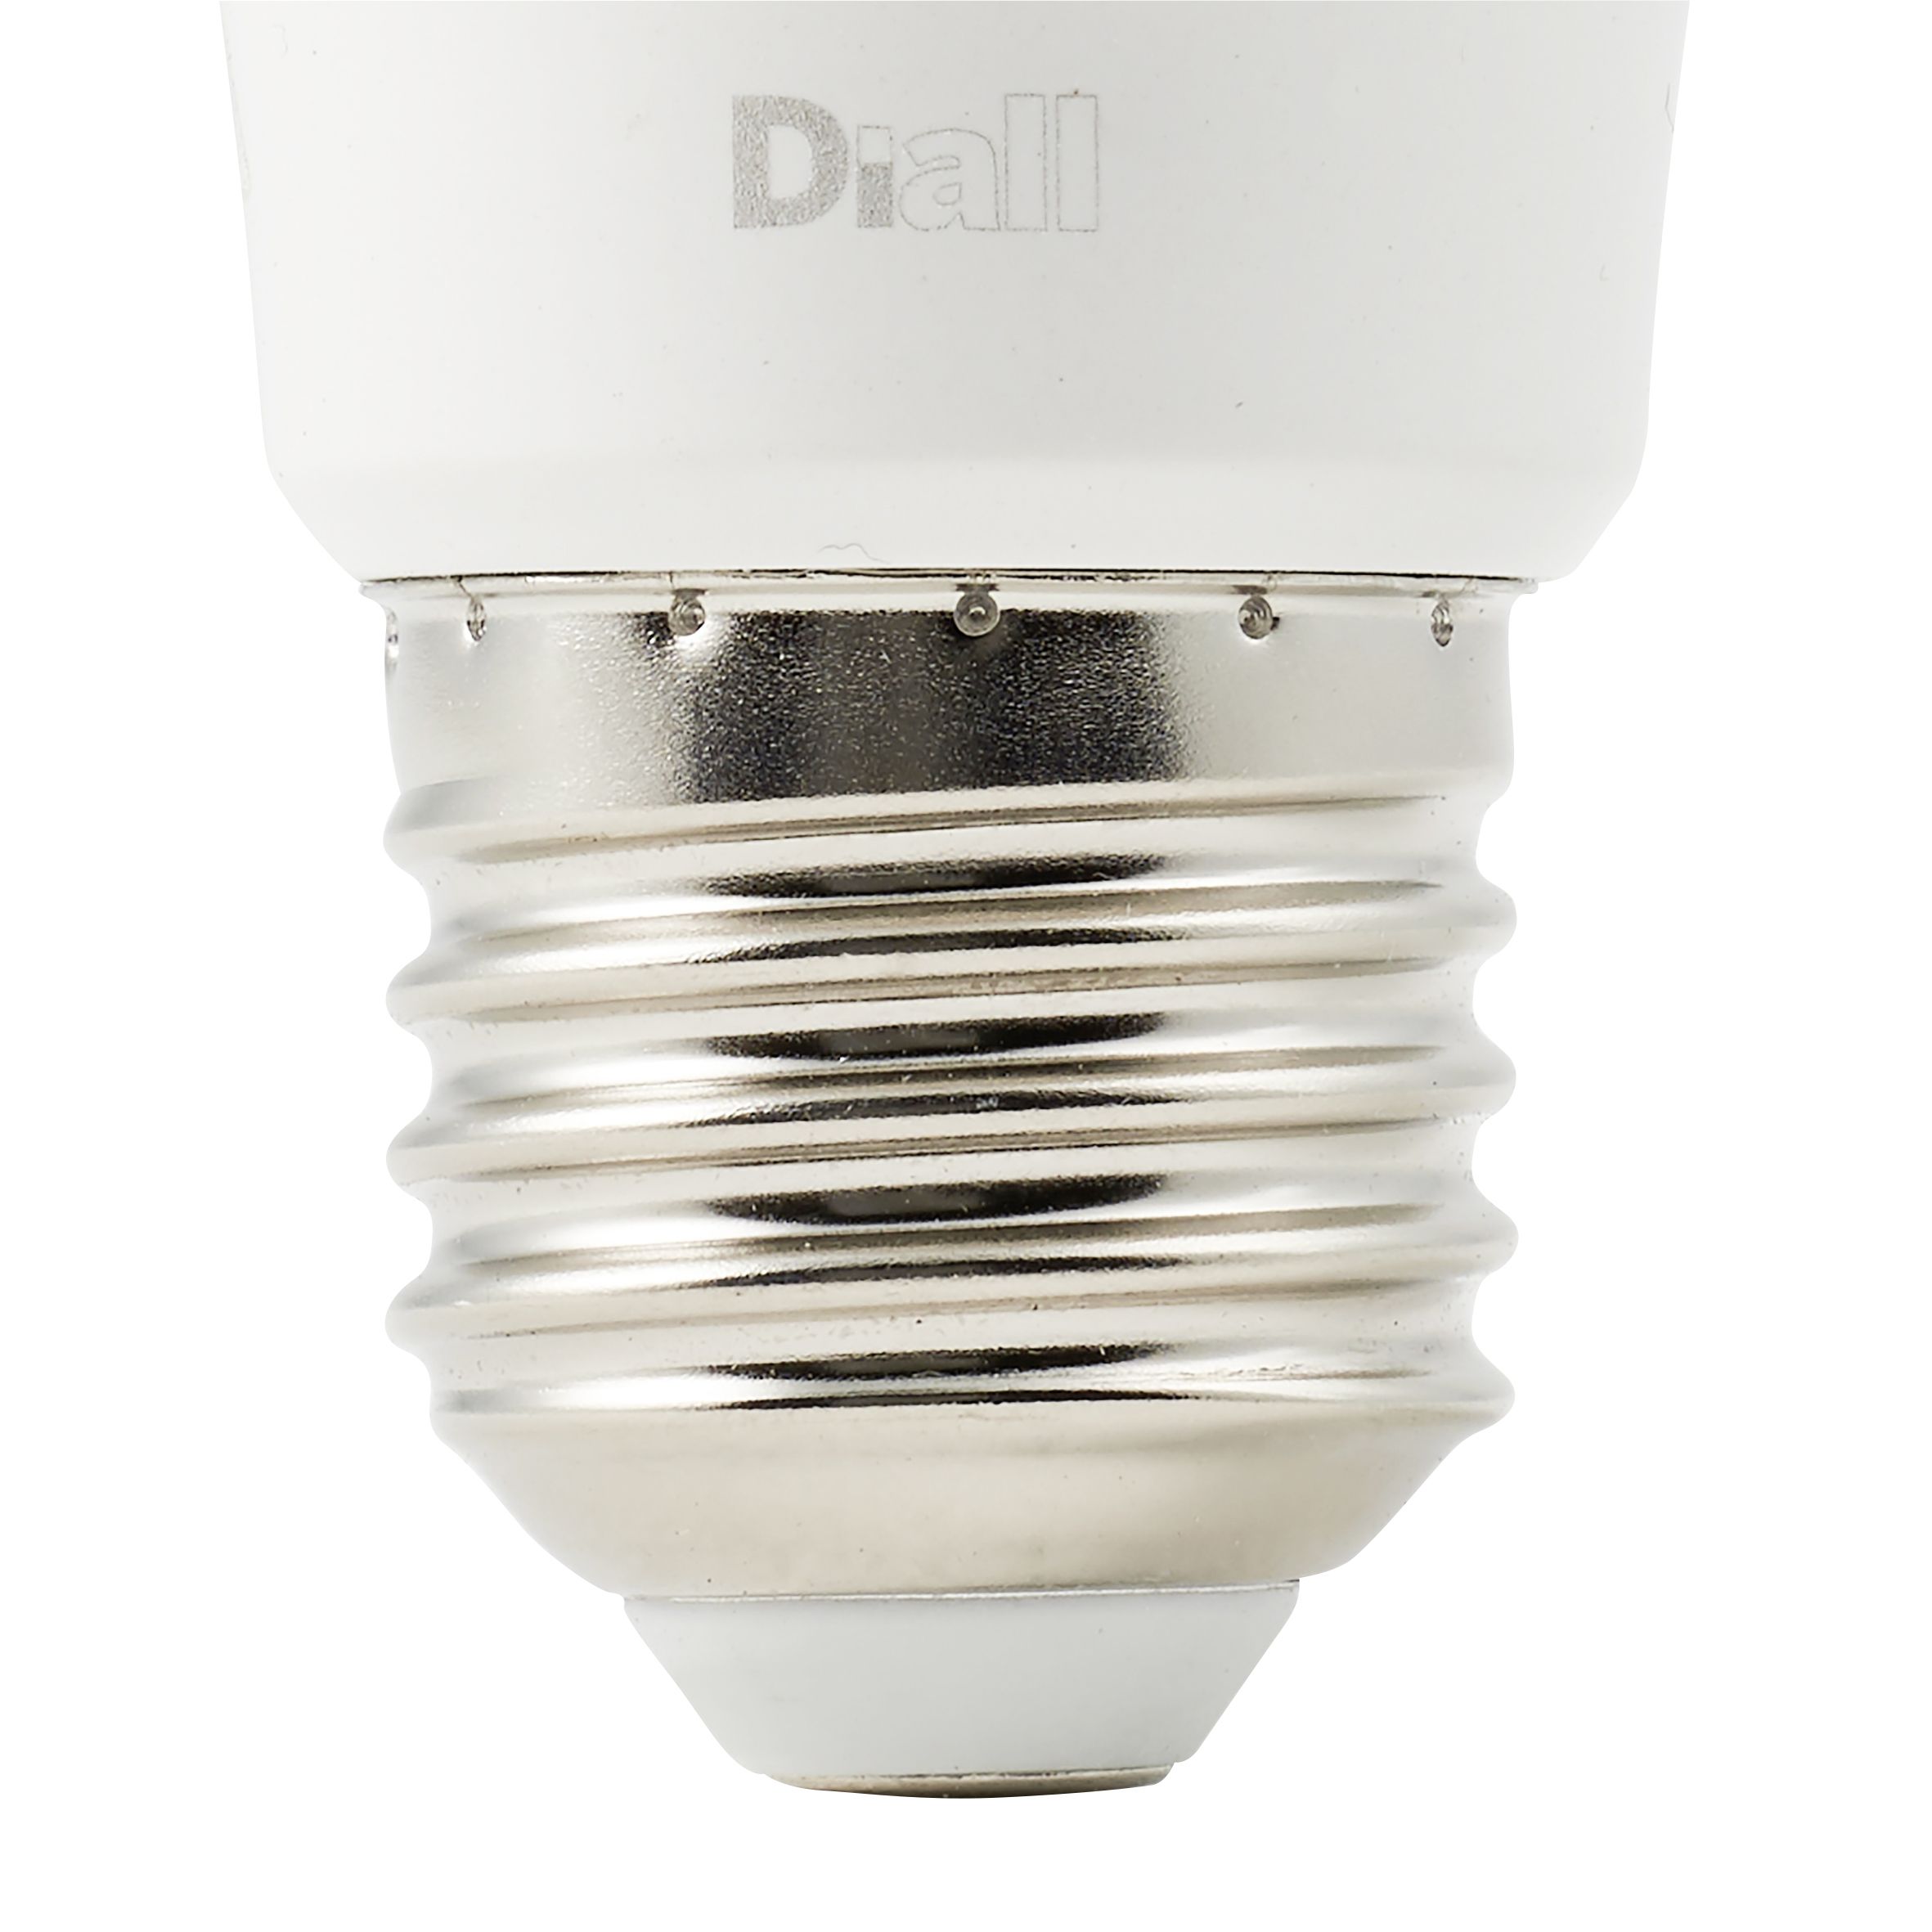 Diall E27 13.8W 1521lm White A60 Warm white LED Light bulb